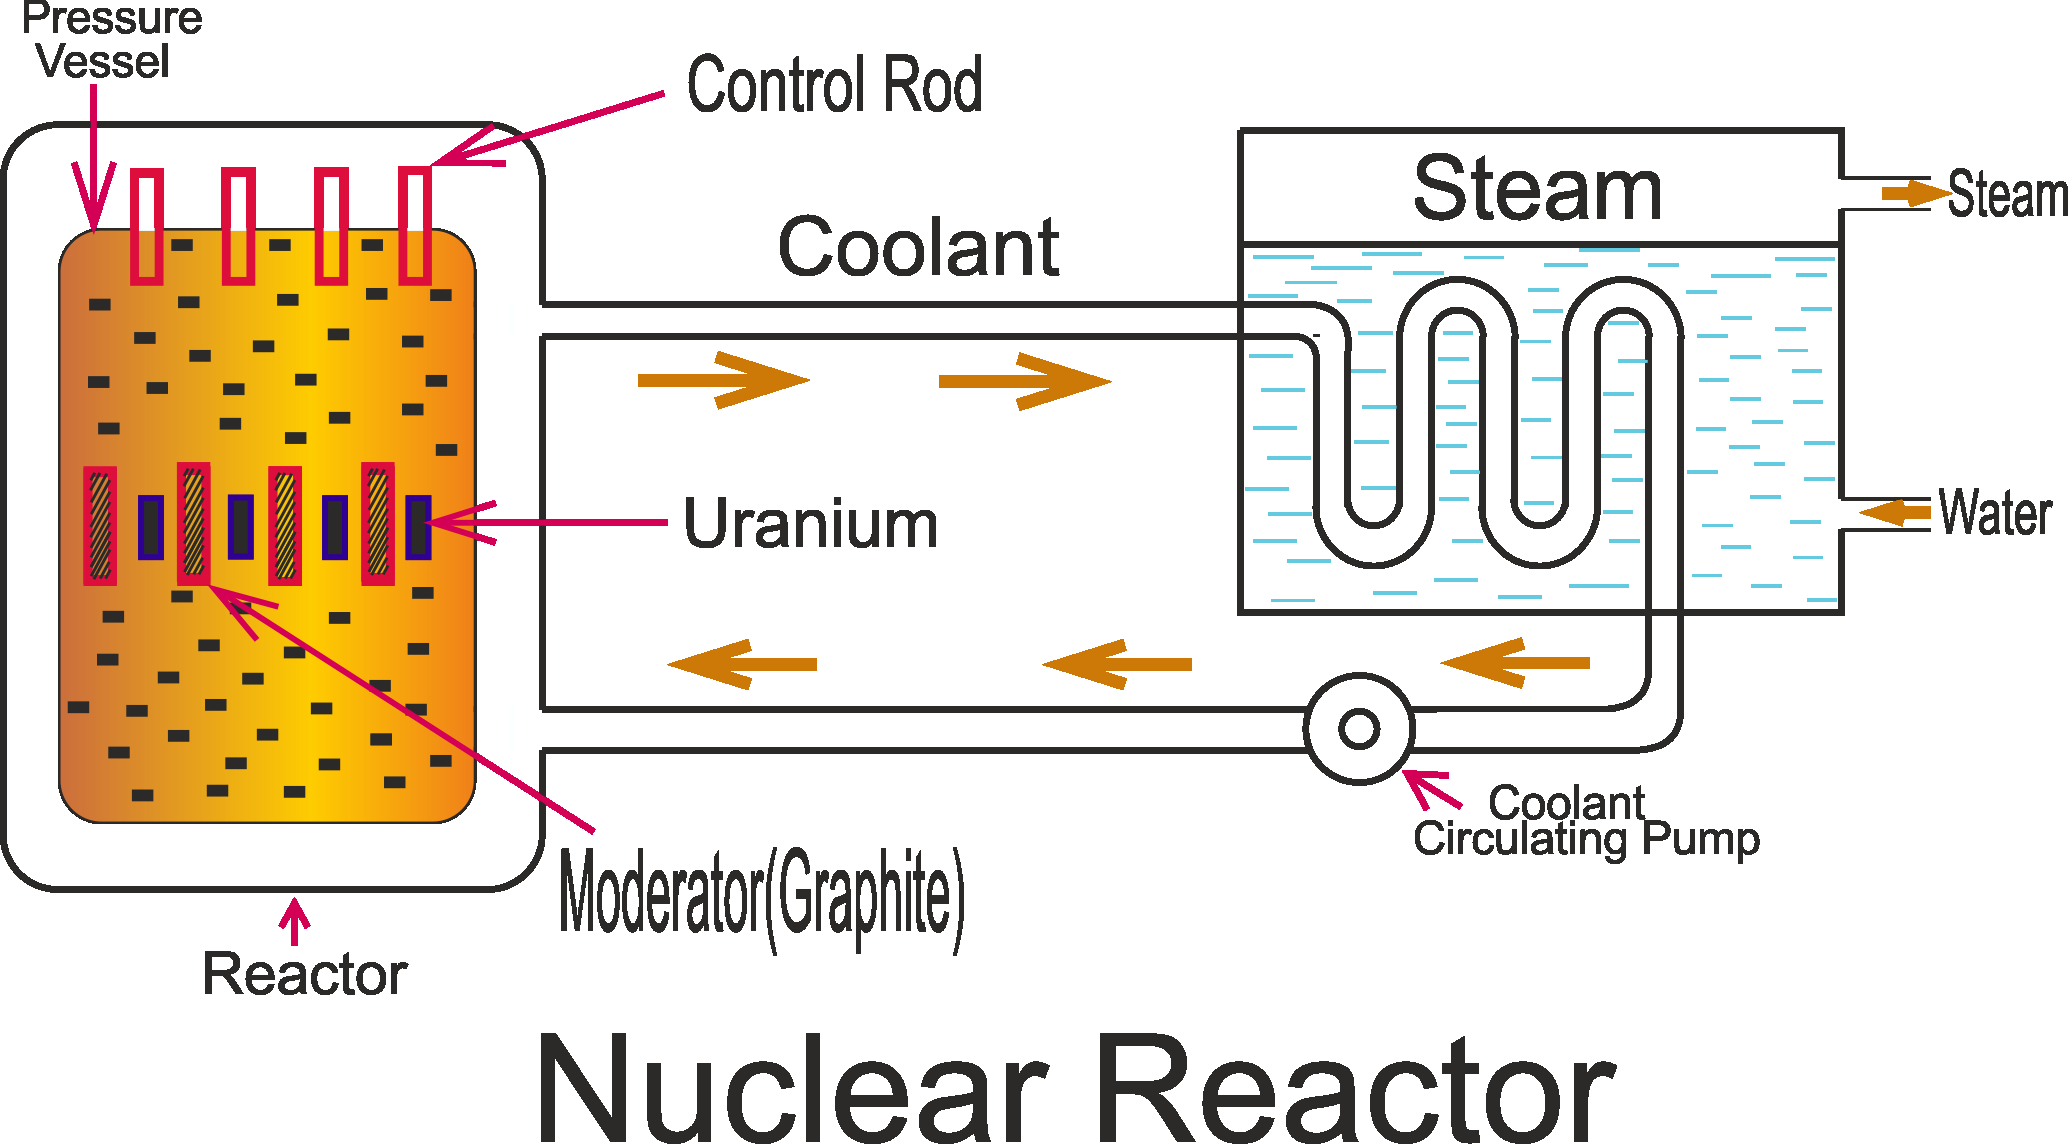 Power Plant Diagram Nuclear Power Plant Simple Diagram Wiring Diagram Shw